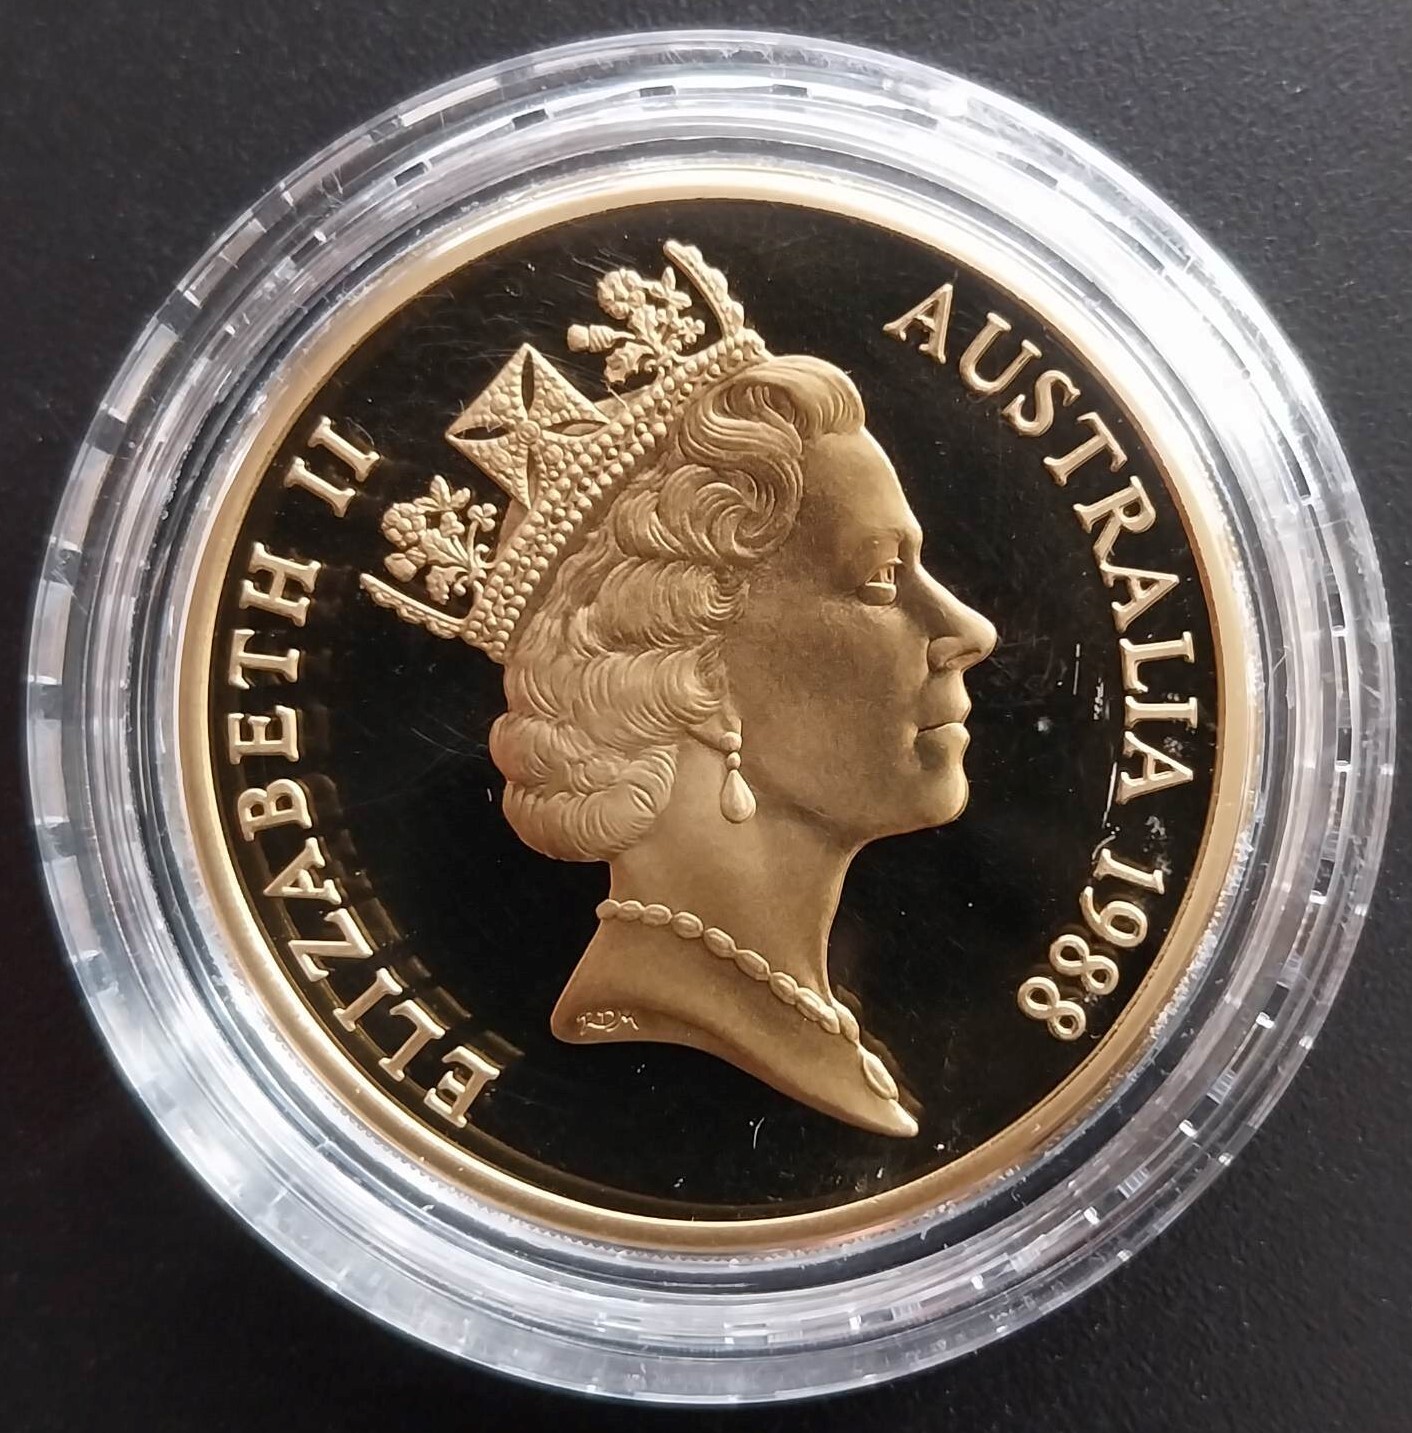 1988 $10 Bicentenary Silver Coin in Capsule